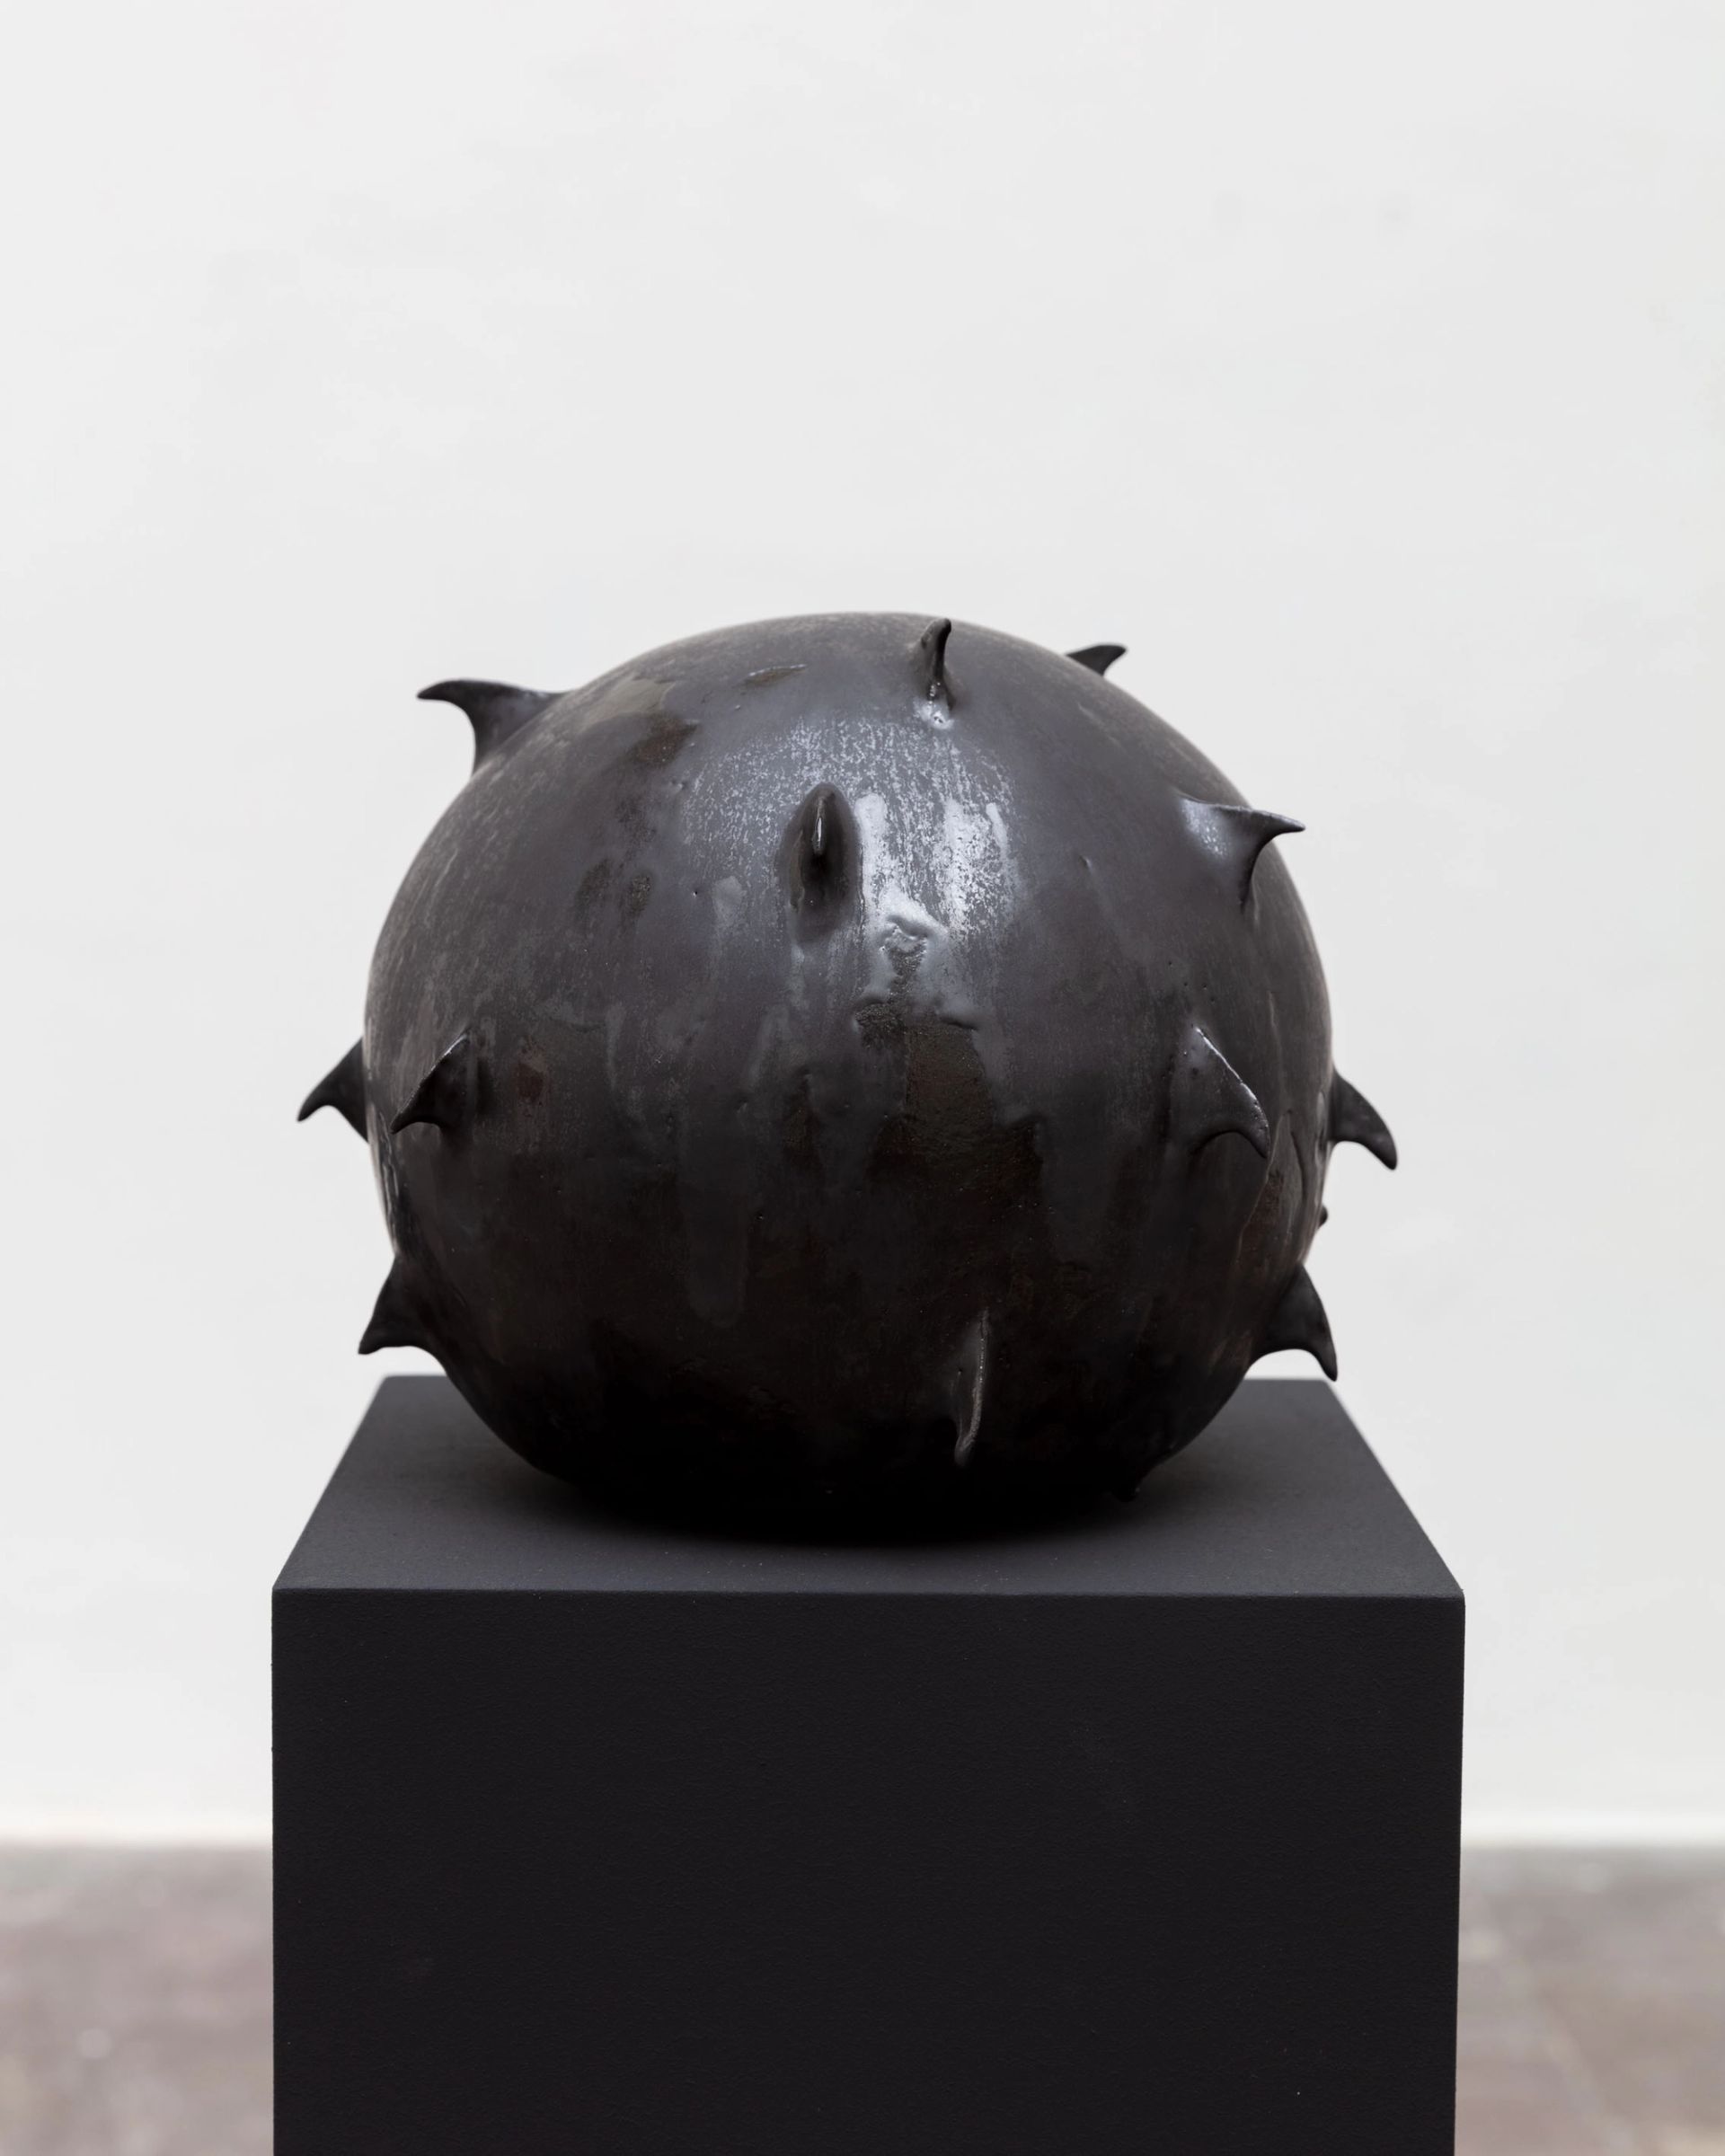 Veronika Hilger, Untitled, 2020, ceramic, glazed, 21 × 23 × 23 cm